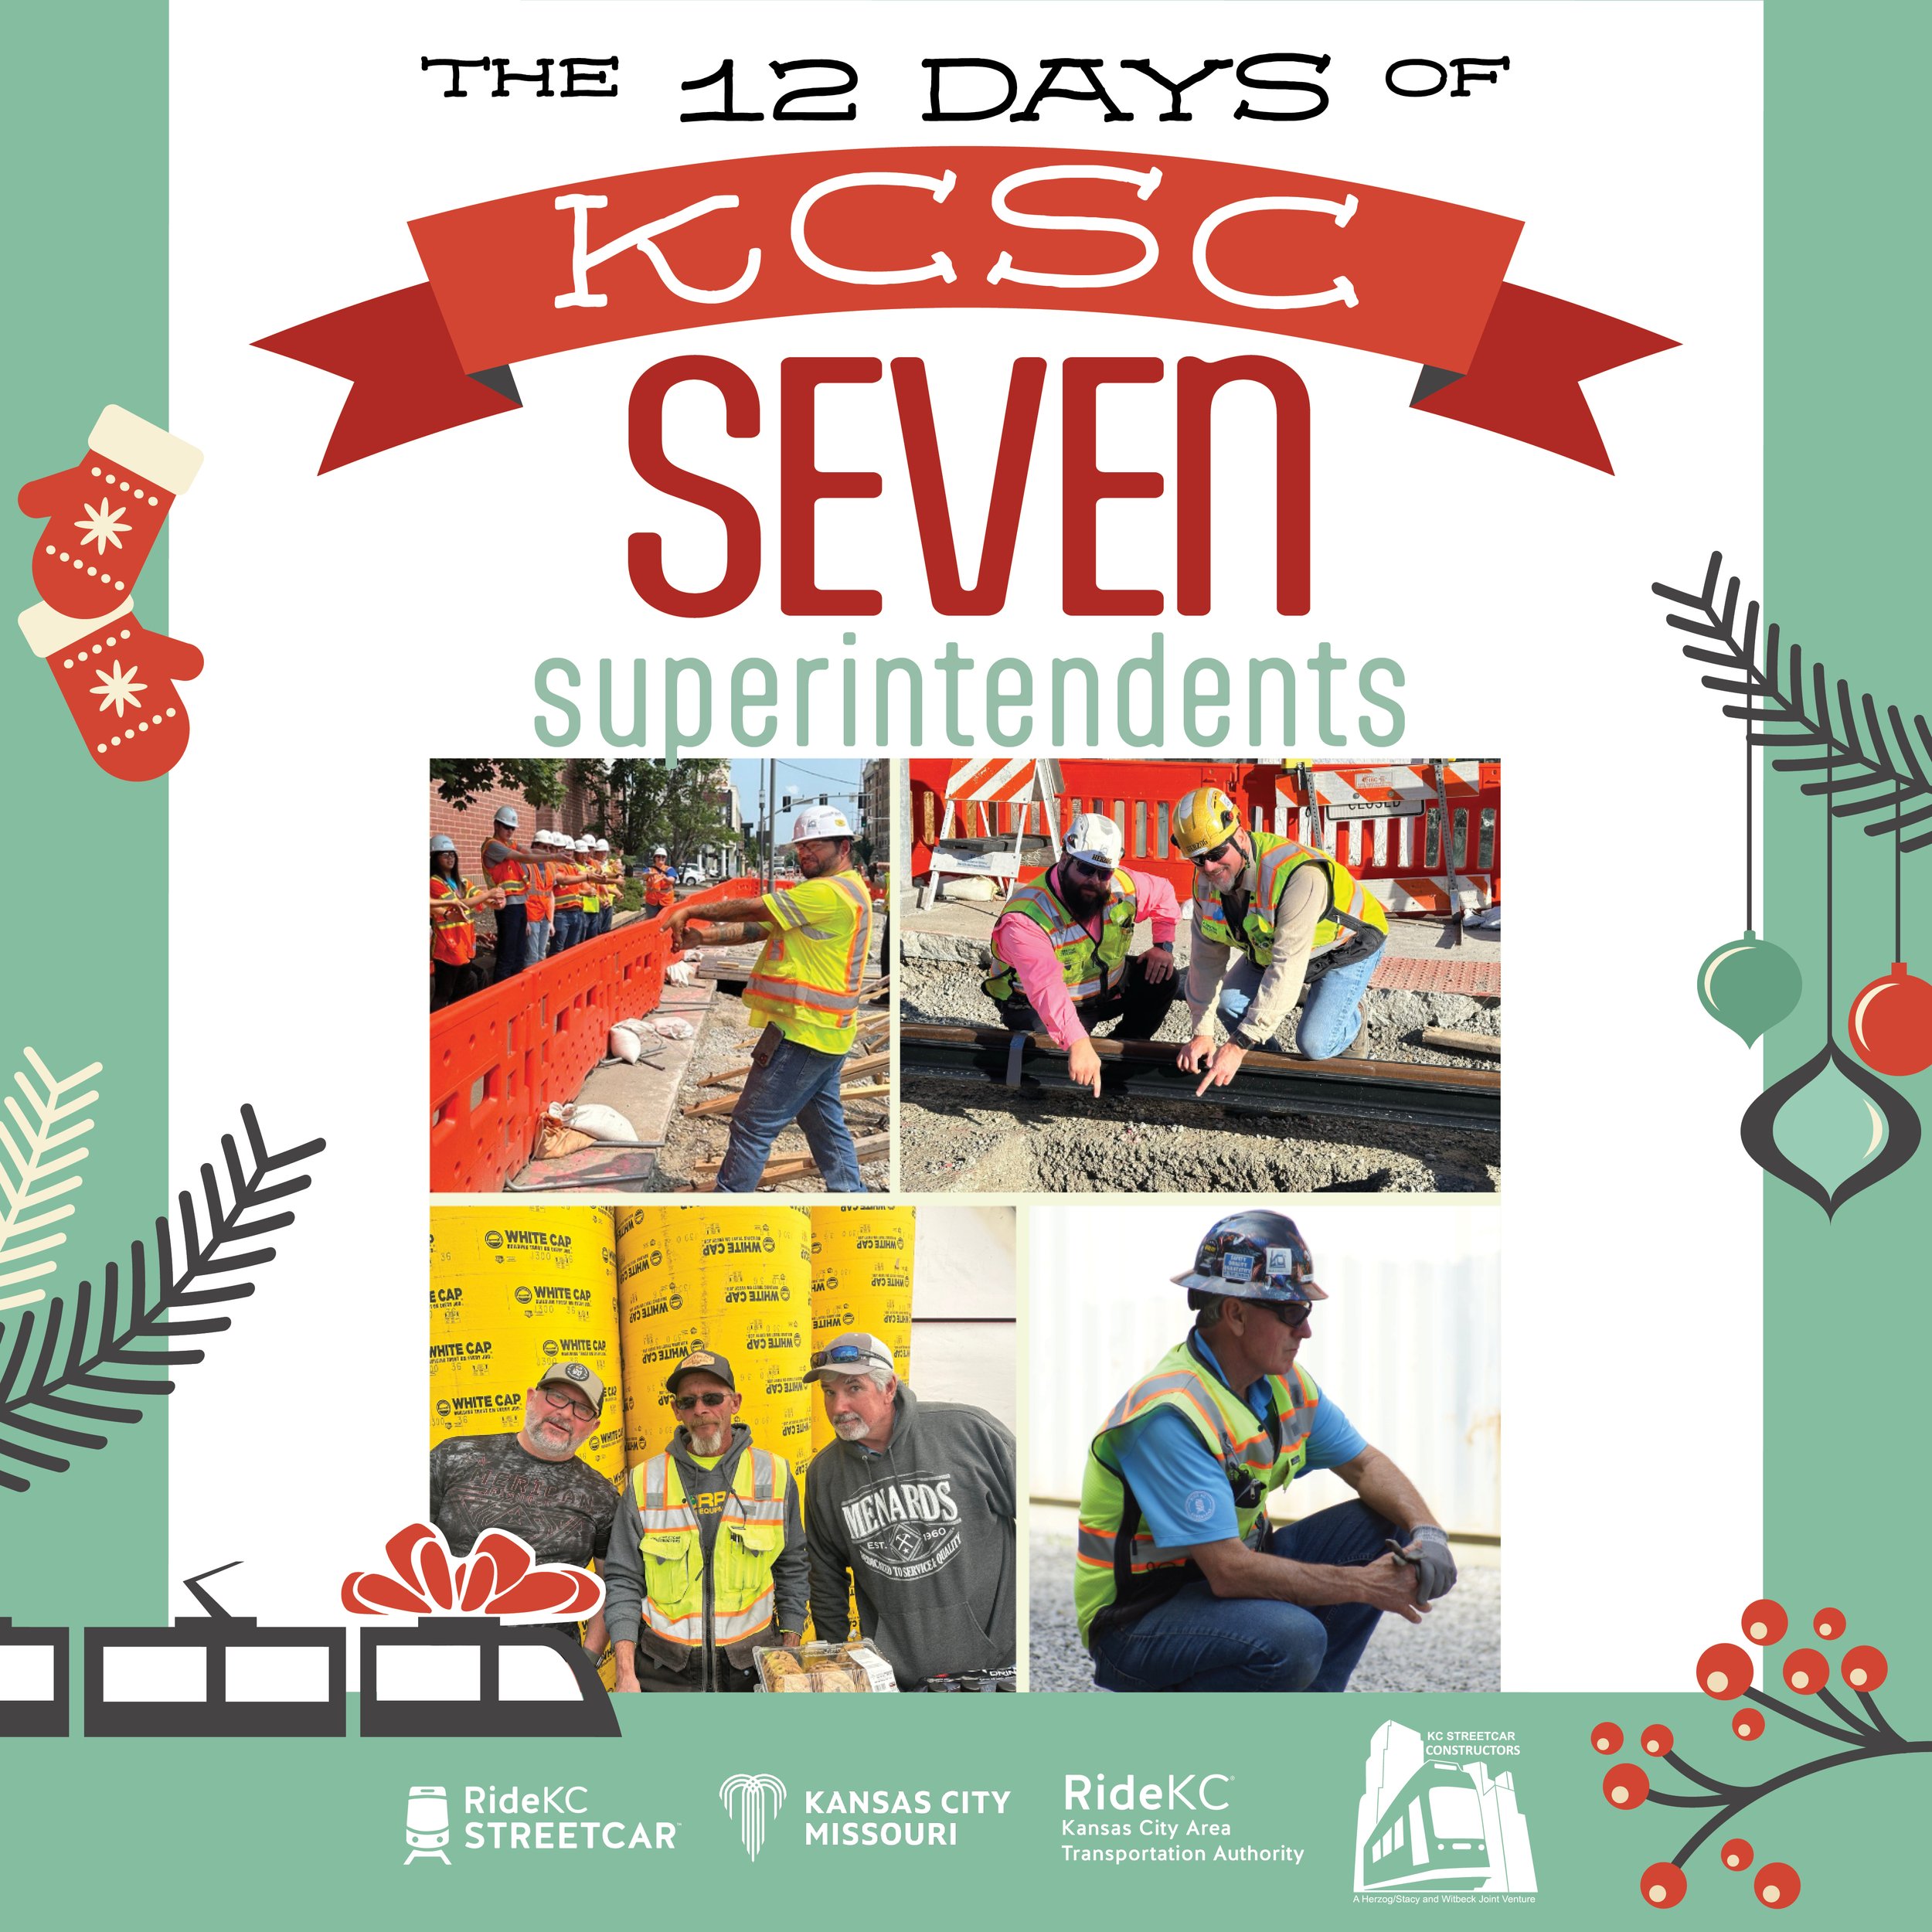 SEVEN Superintendents